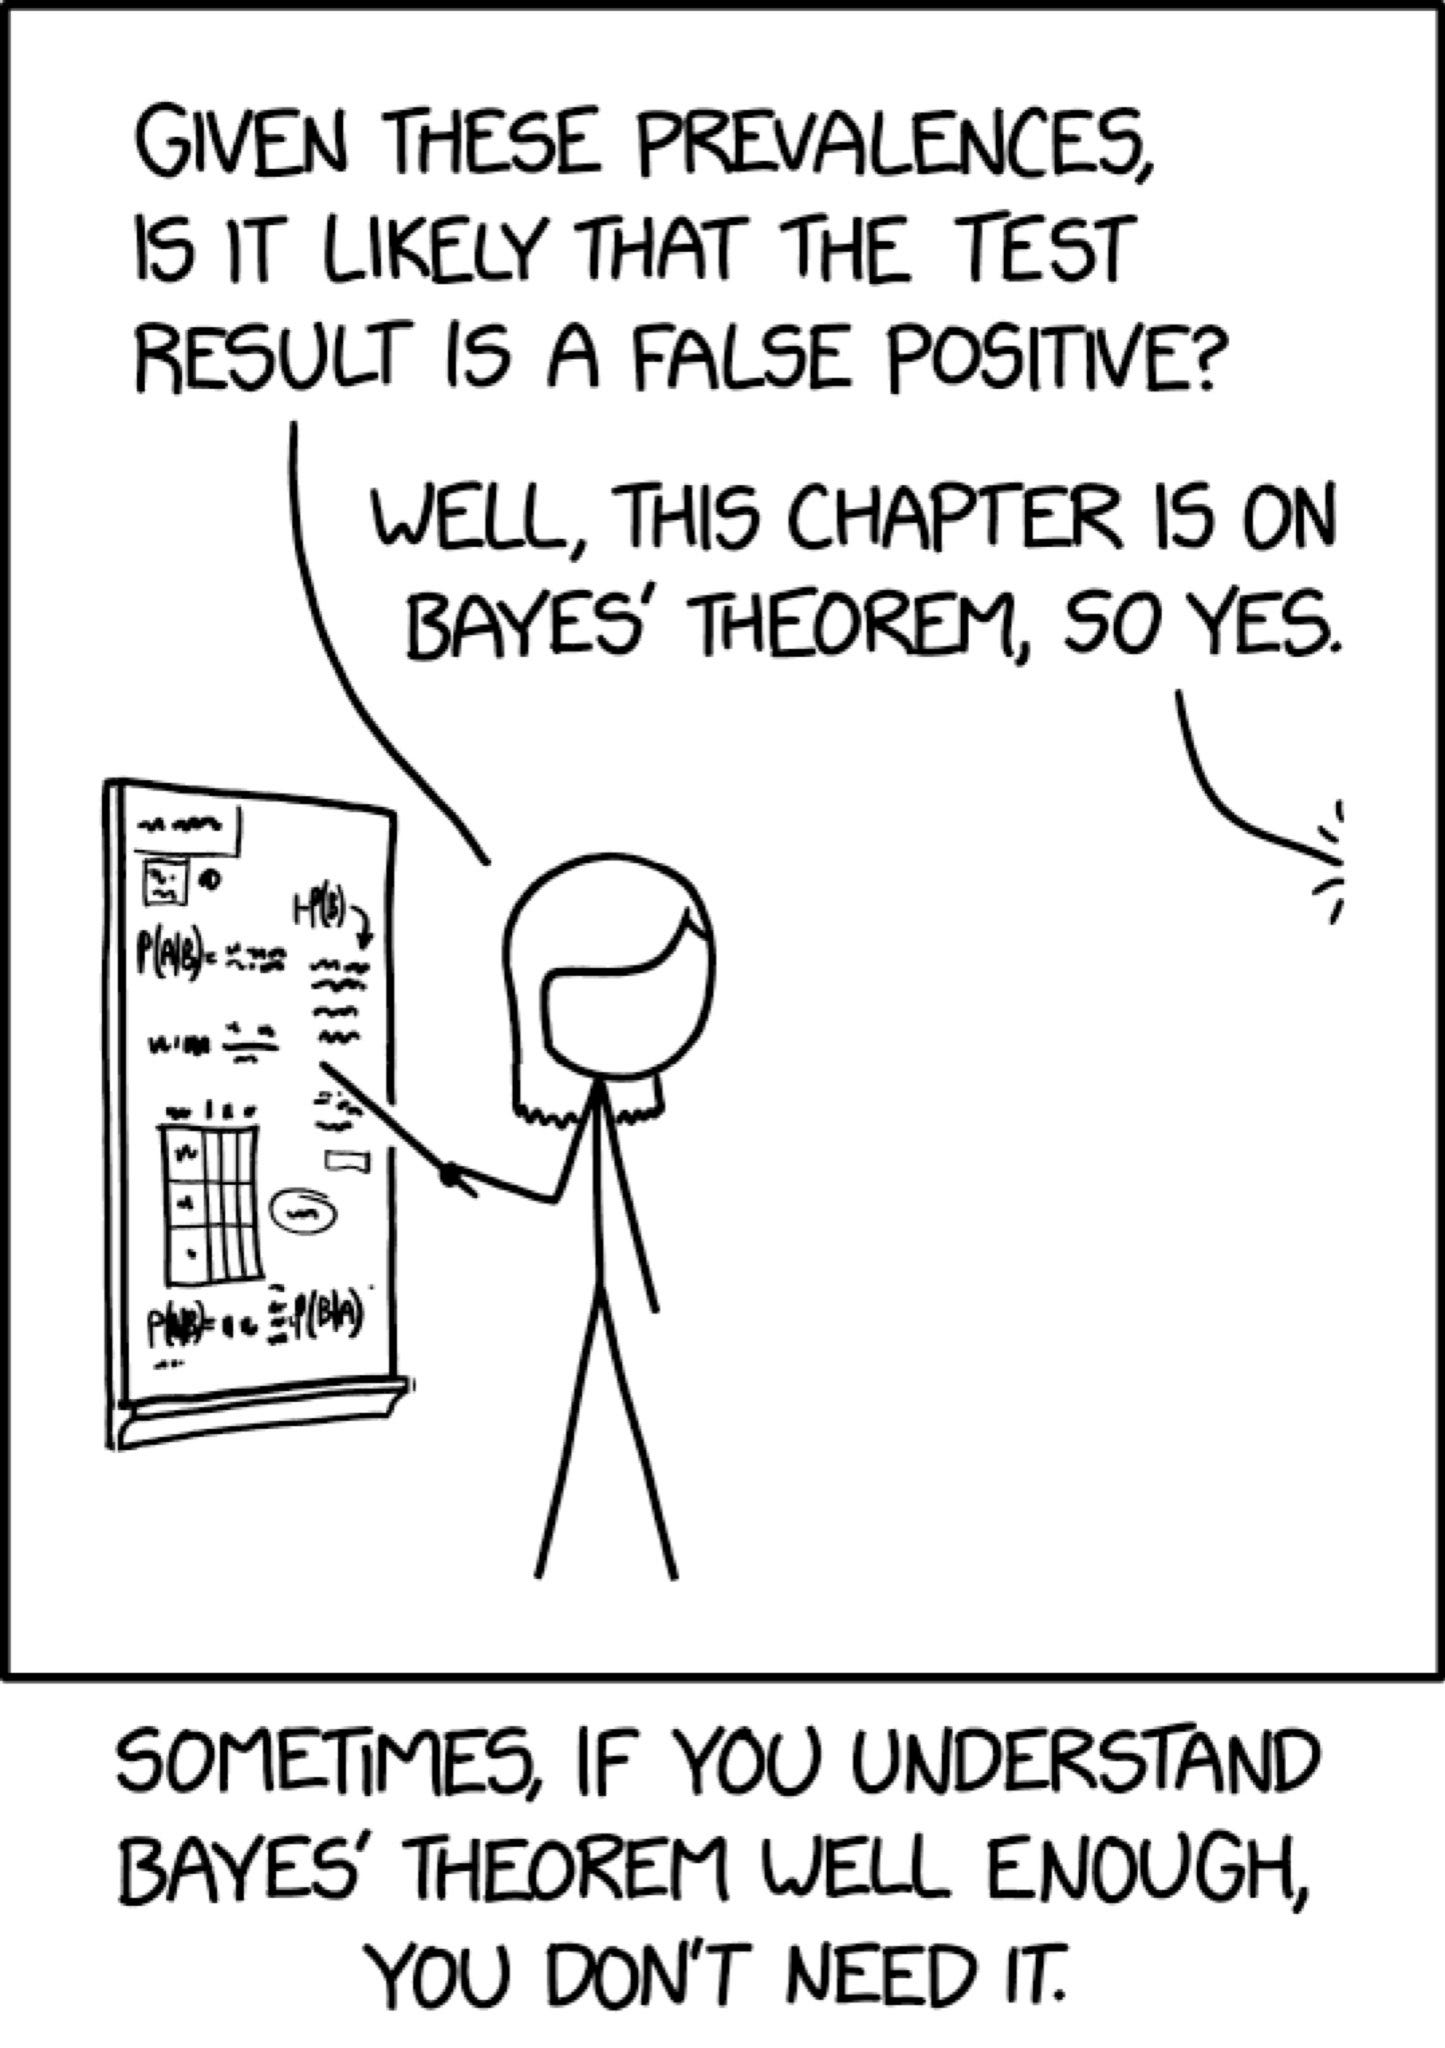 Randall Munroe on Twitter: "Bayes' Theorem https://t.co/77wxdRmYZI  https://t.co/obSrhIhY52" / Twitter